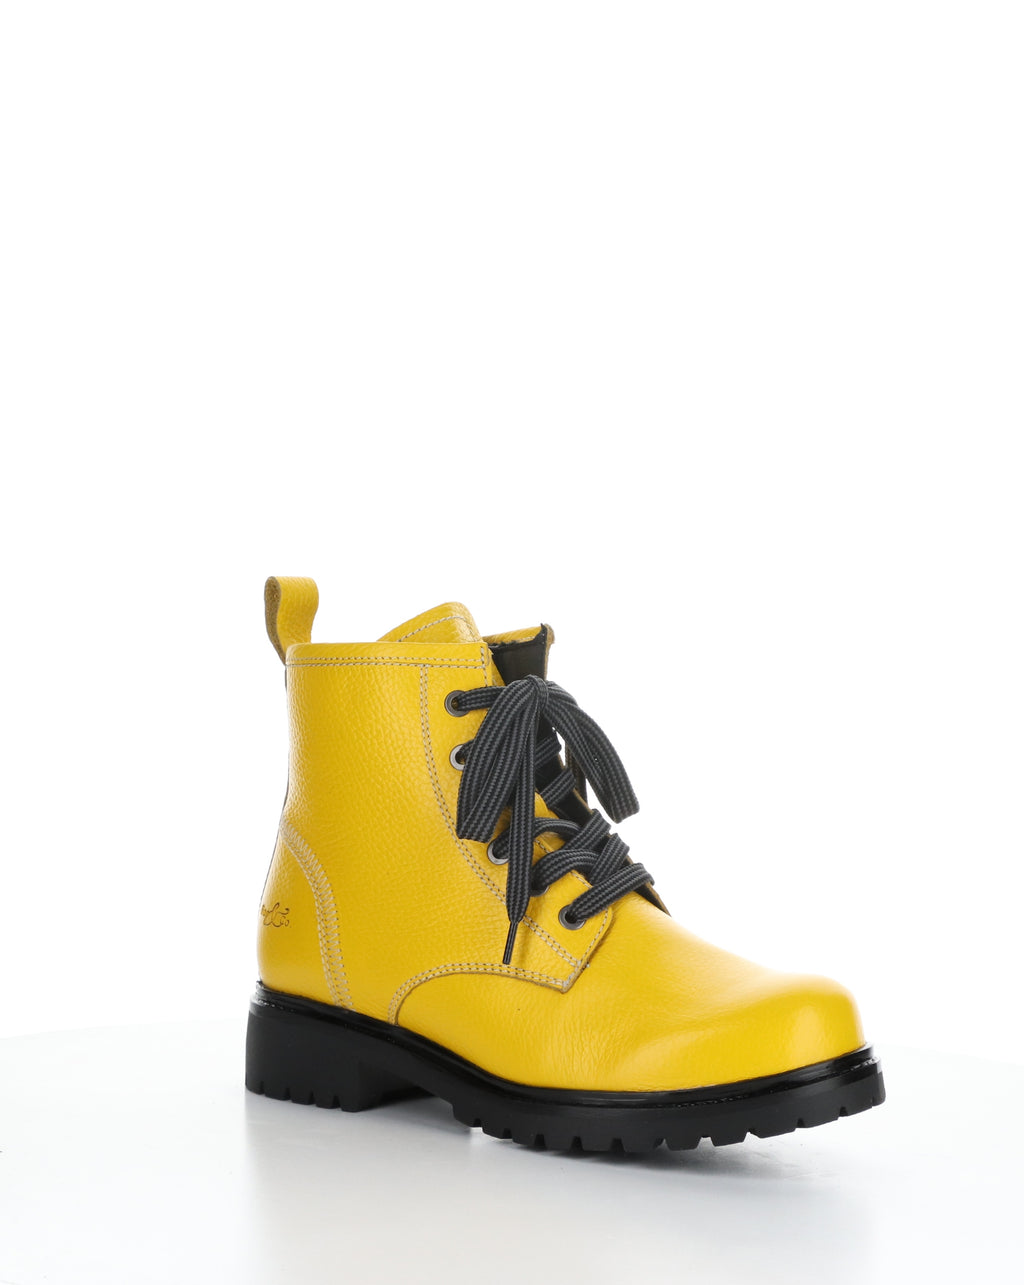 Bos&Co. "Carinas" Mustard - Waterproof Boot